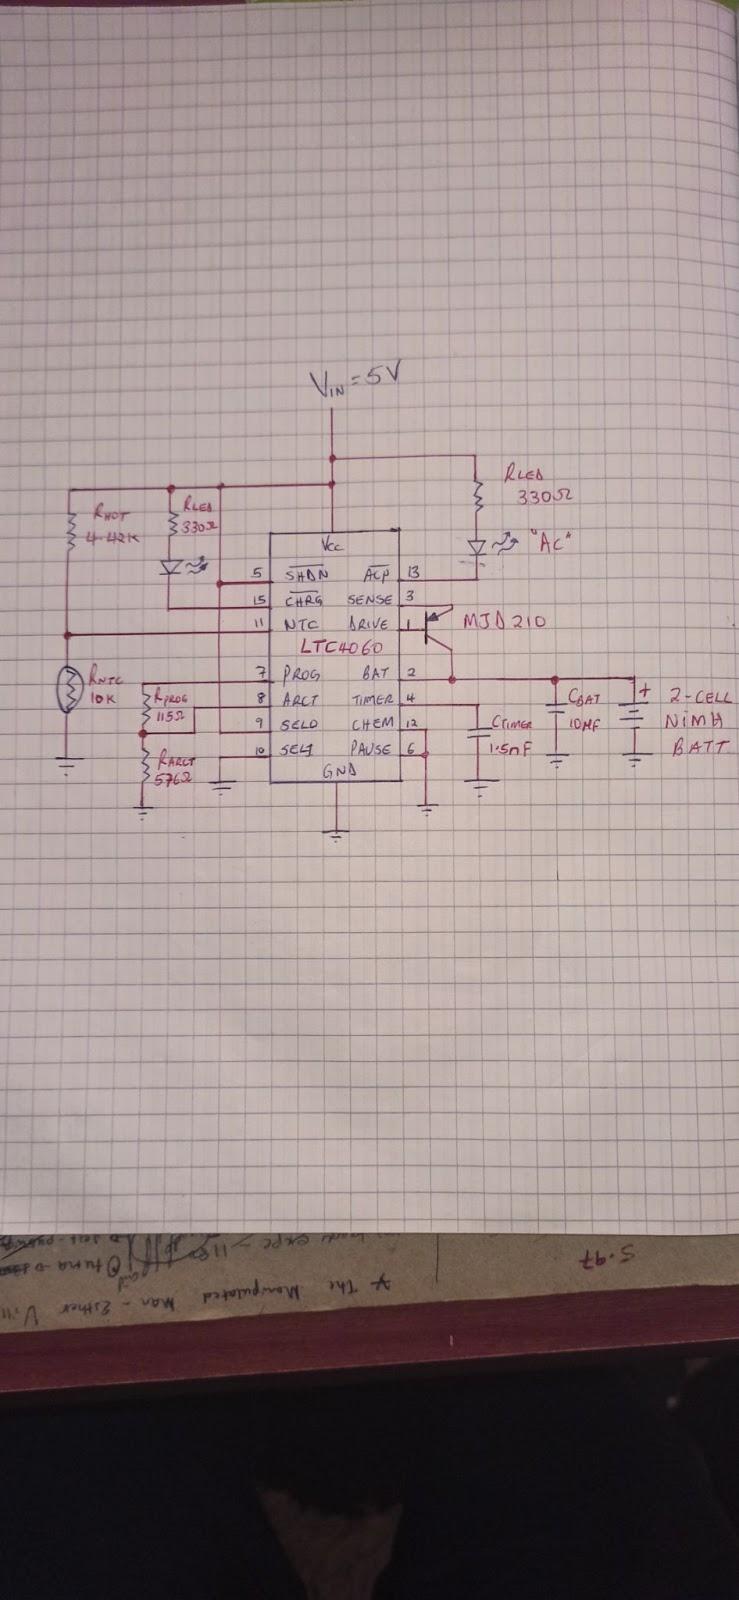 A simple NiMH circuit diagram